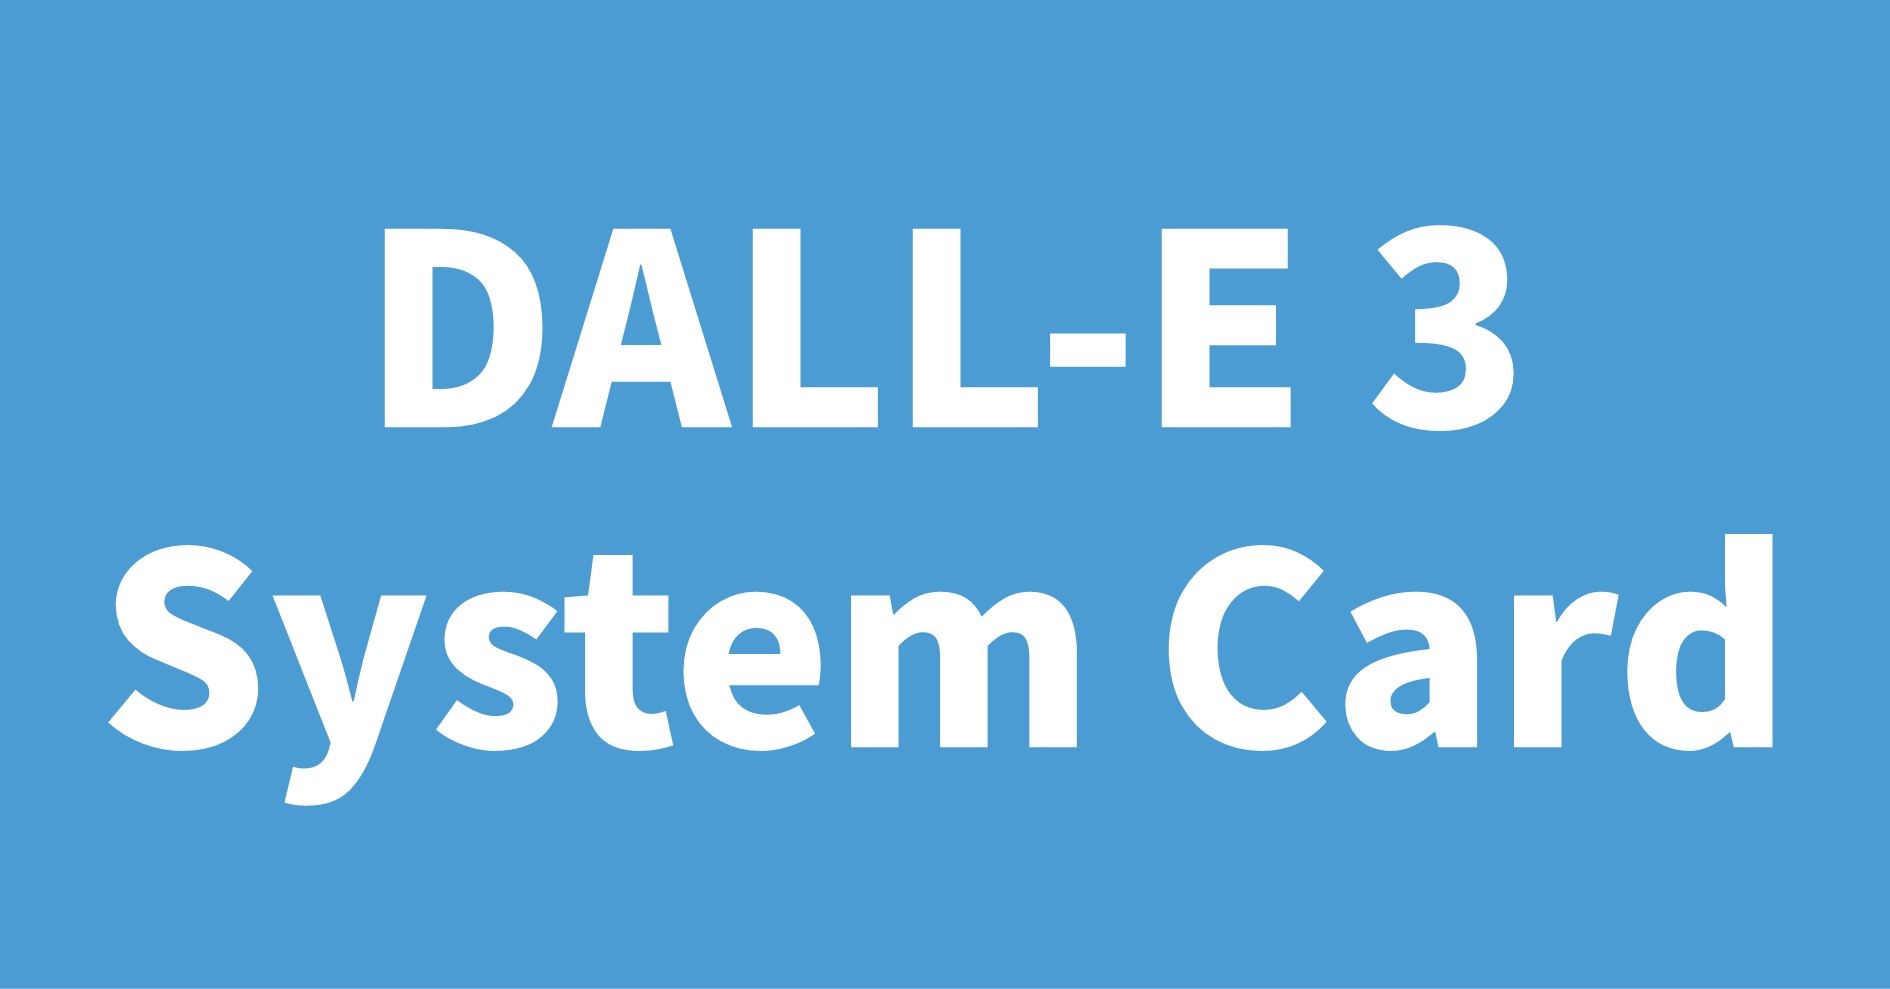 DALL-E 3 System Card